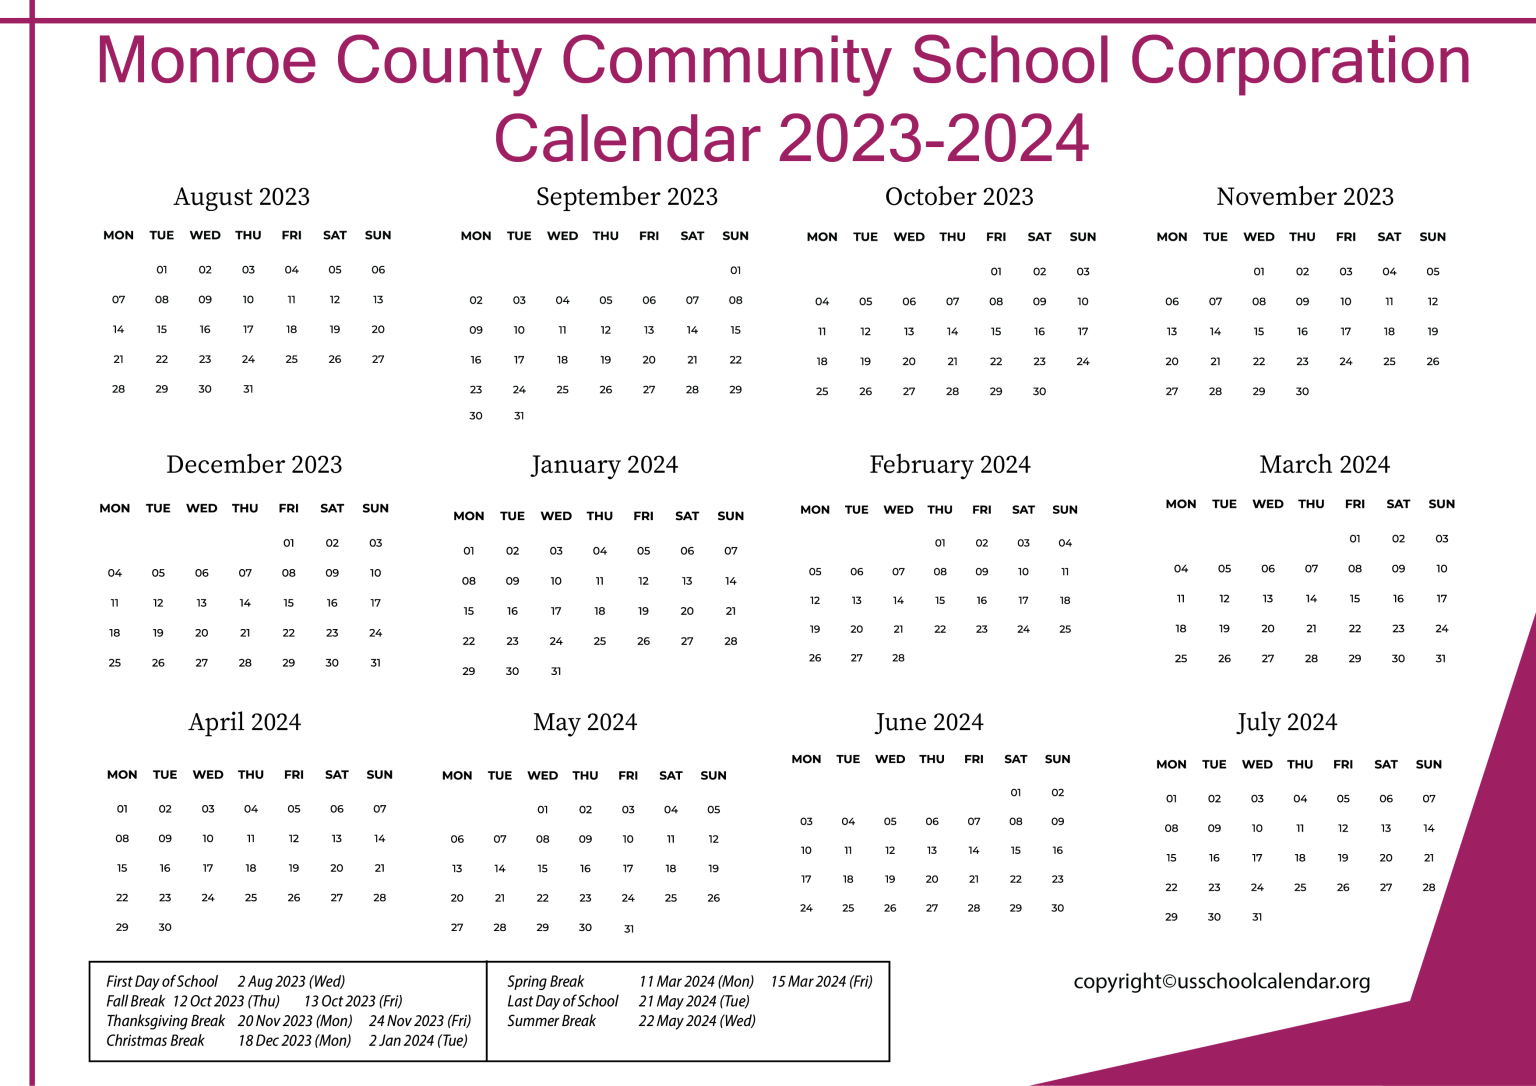 MCCSC Calendar US School Calendar